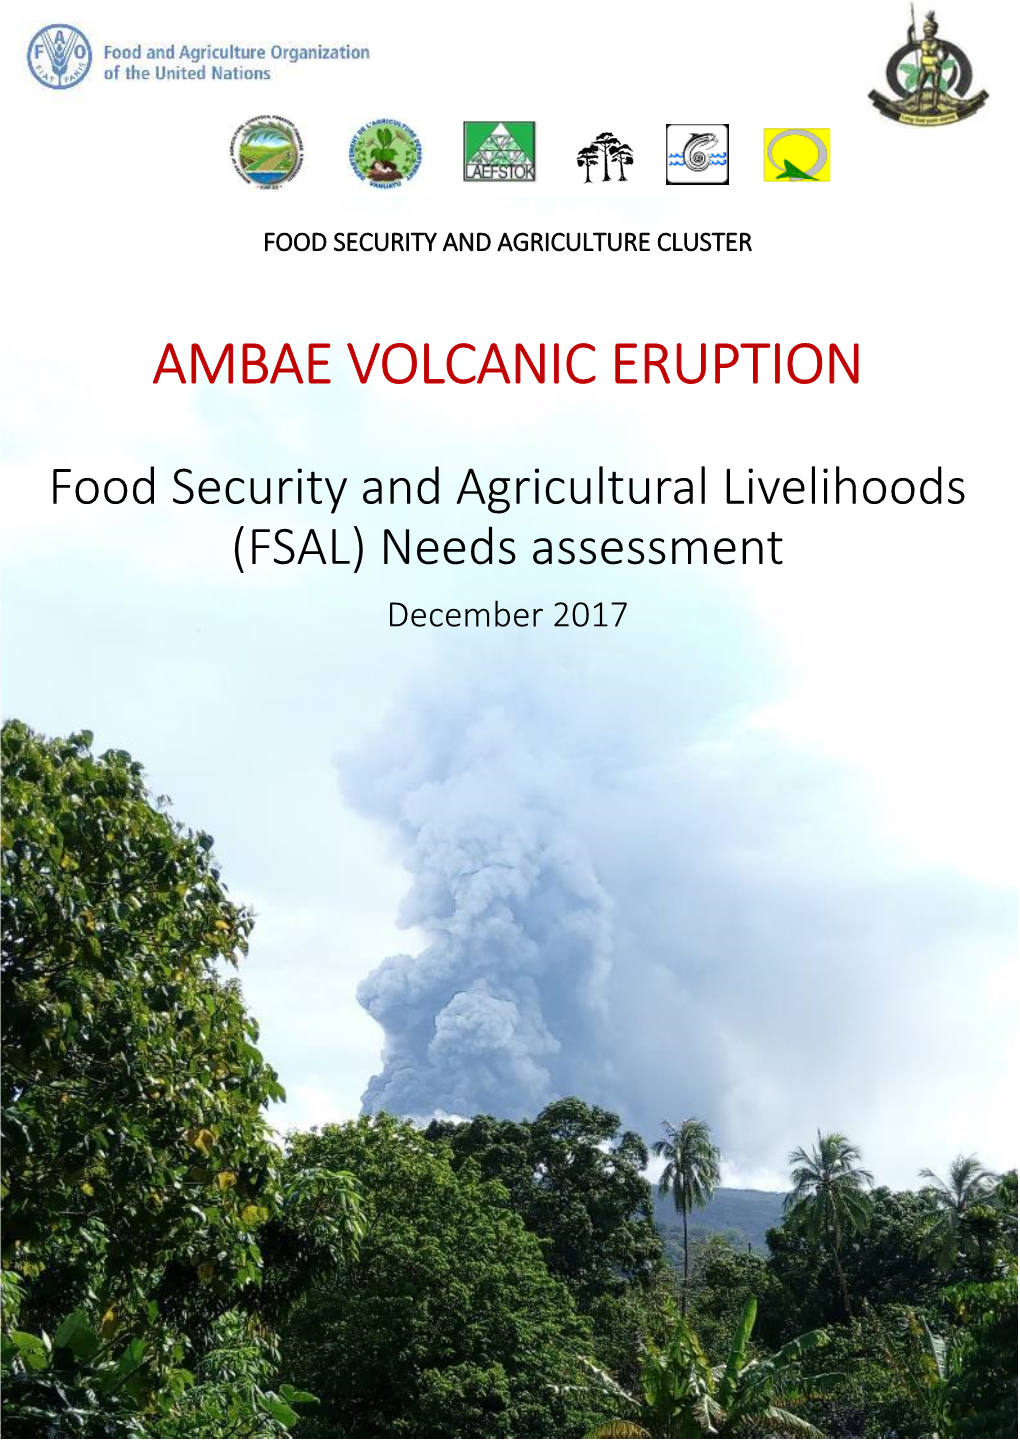 Ambae Volcanic Eruption